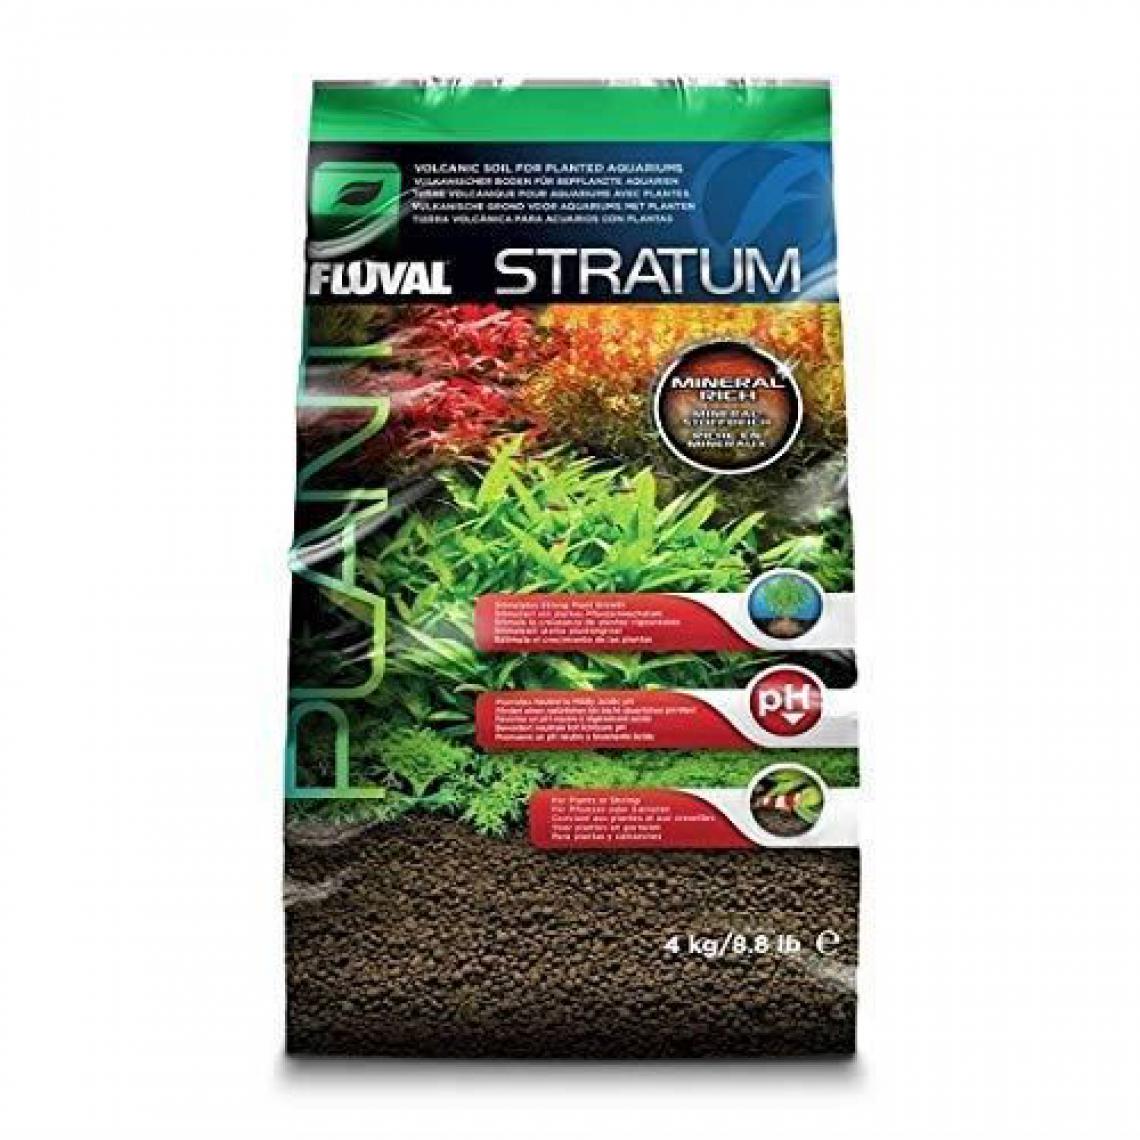 Fluval - Substrat StratumFL plantes/crevet.,4kg - Décoration aquarium